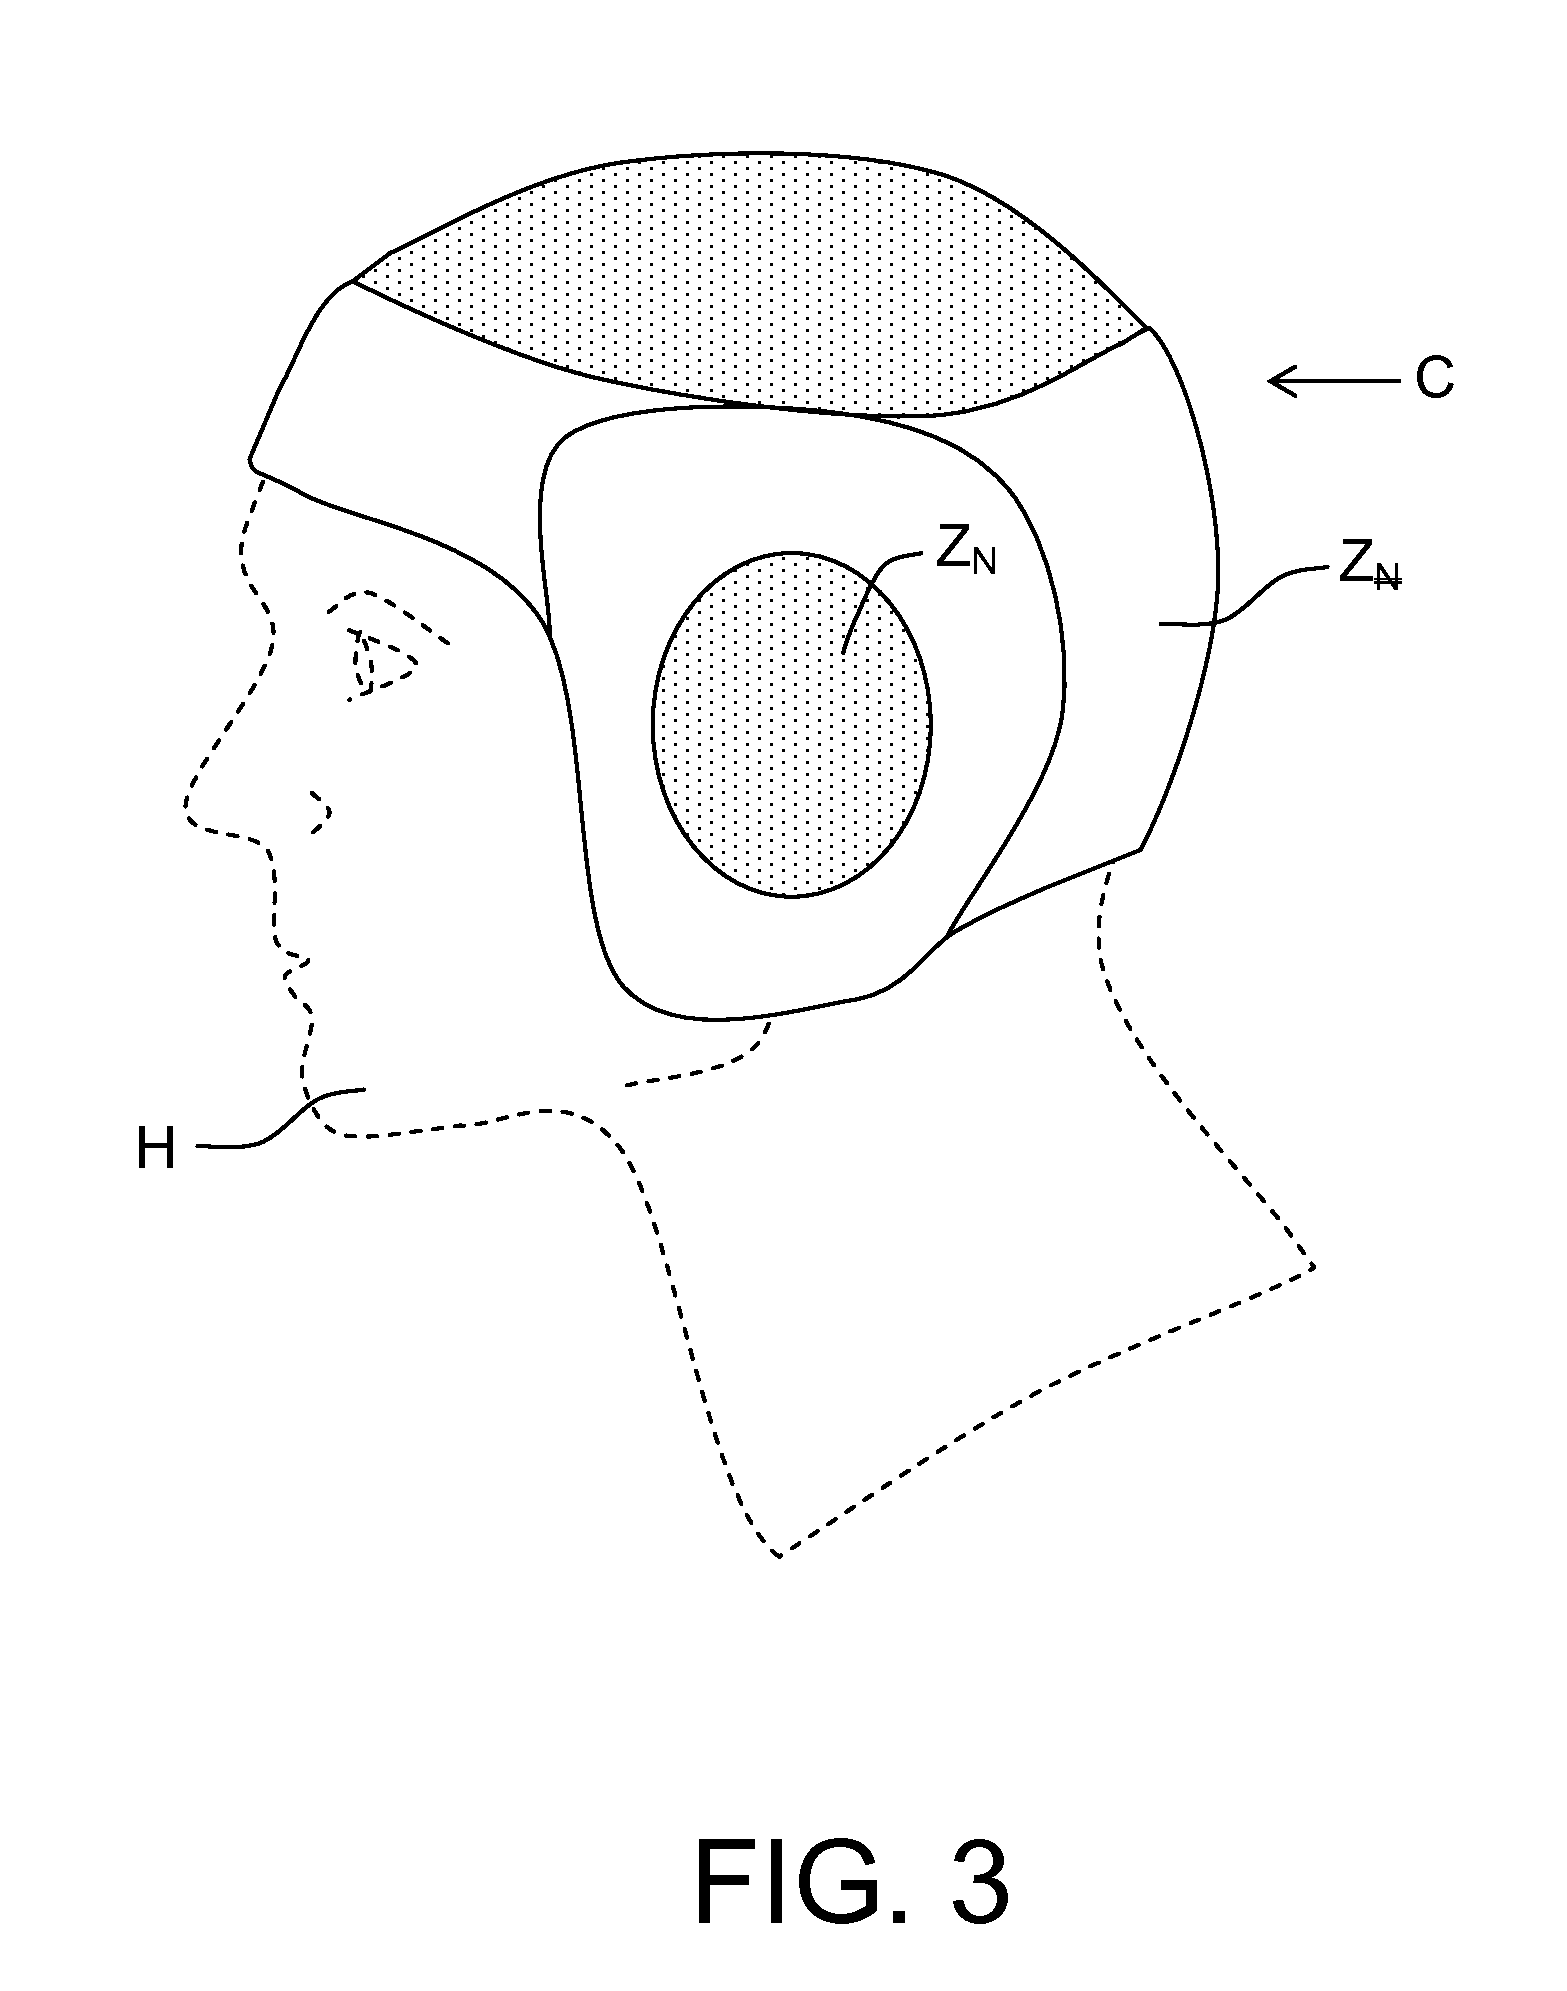 Helmet Shell Made of Composite Material